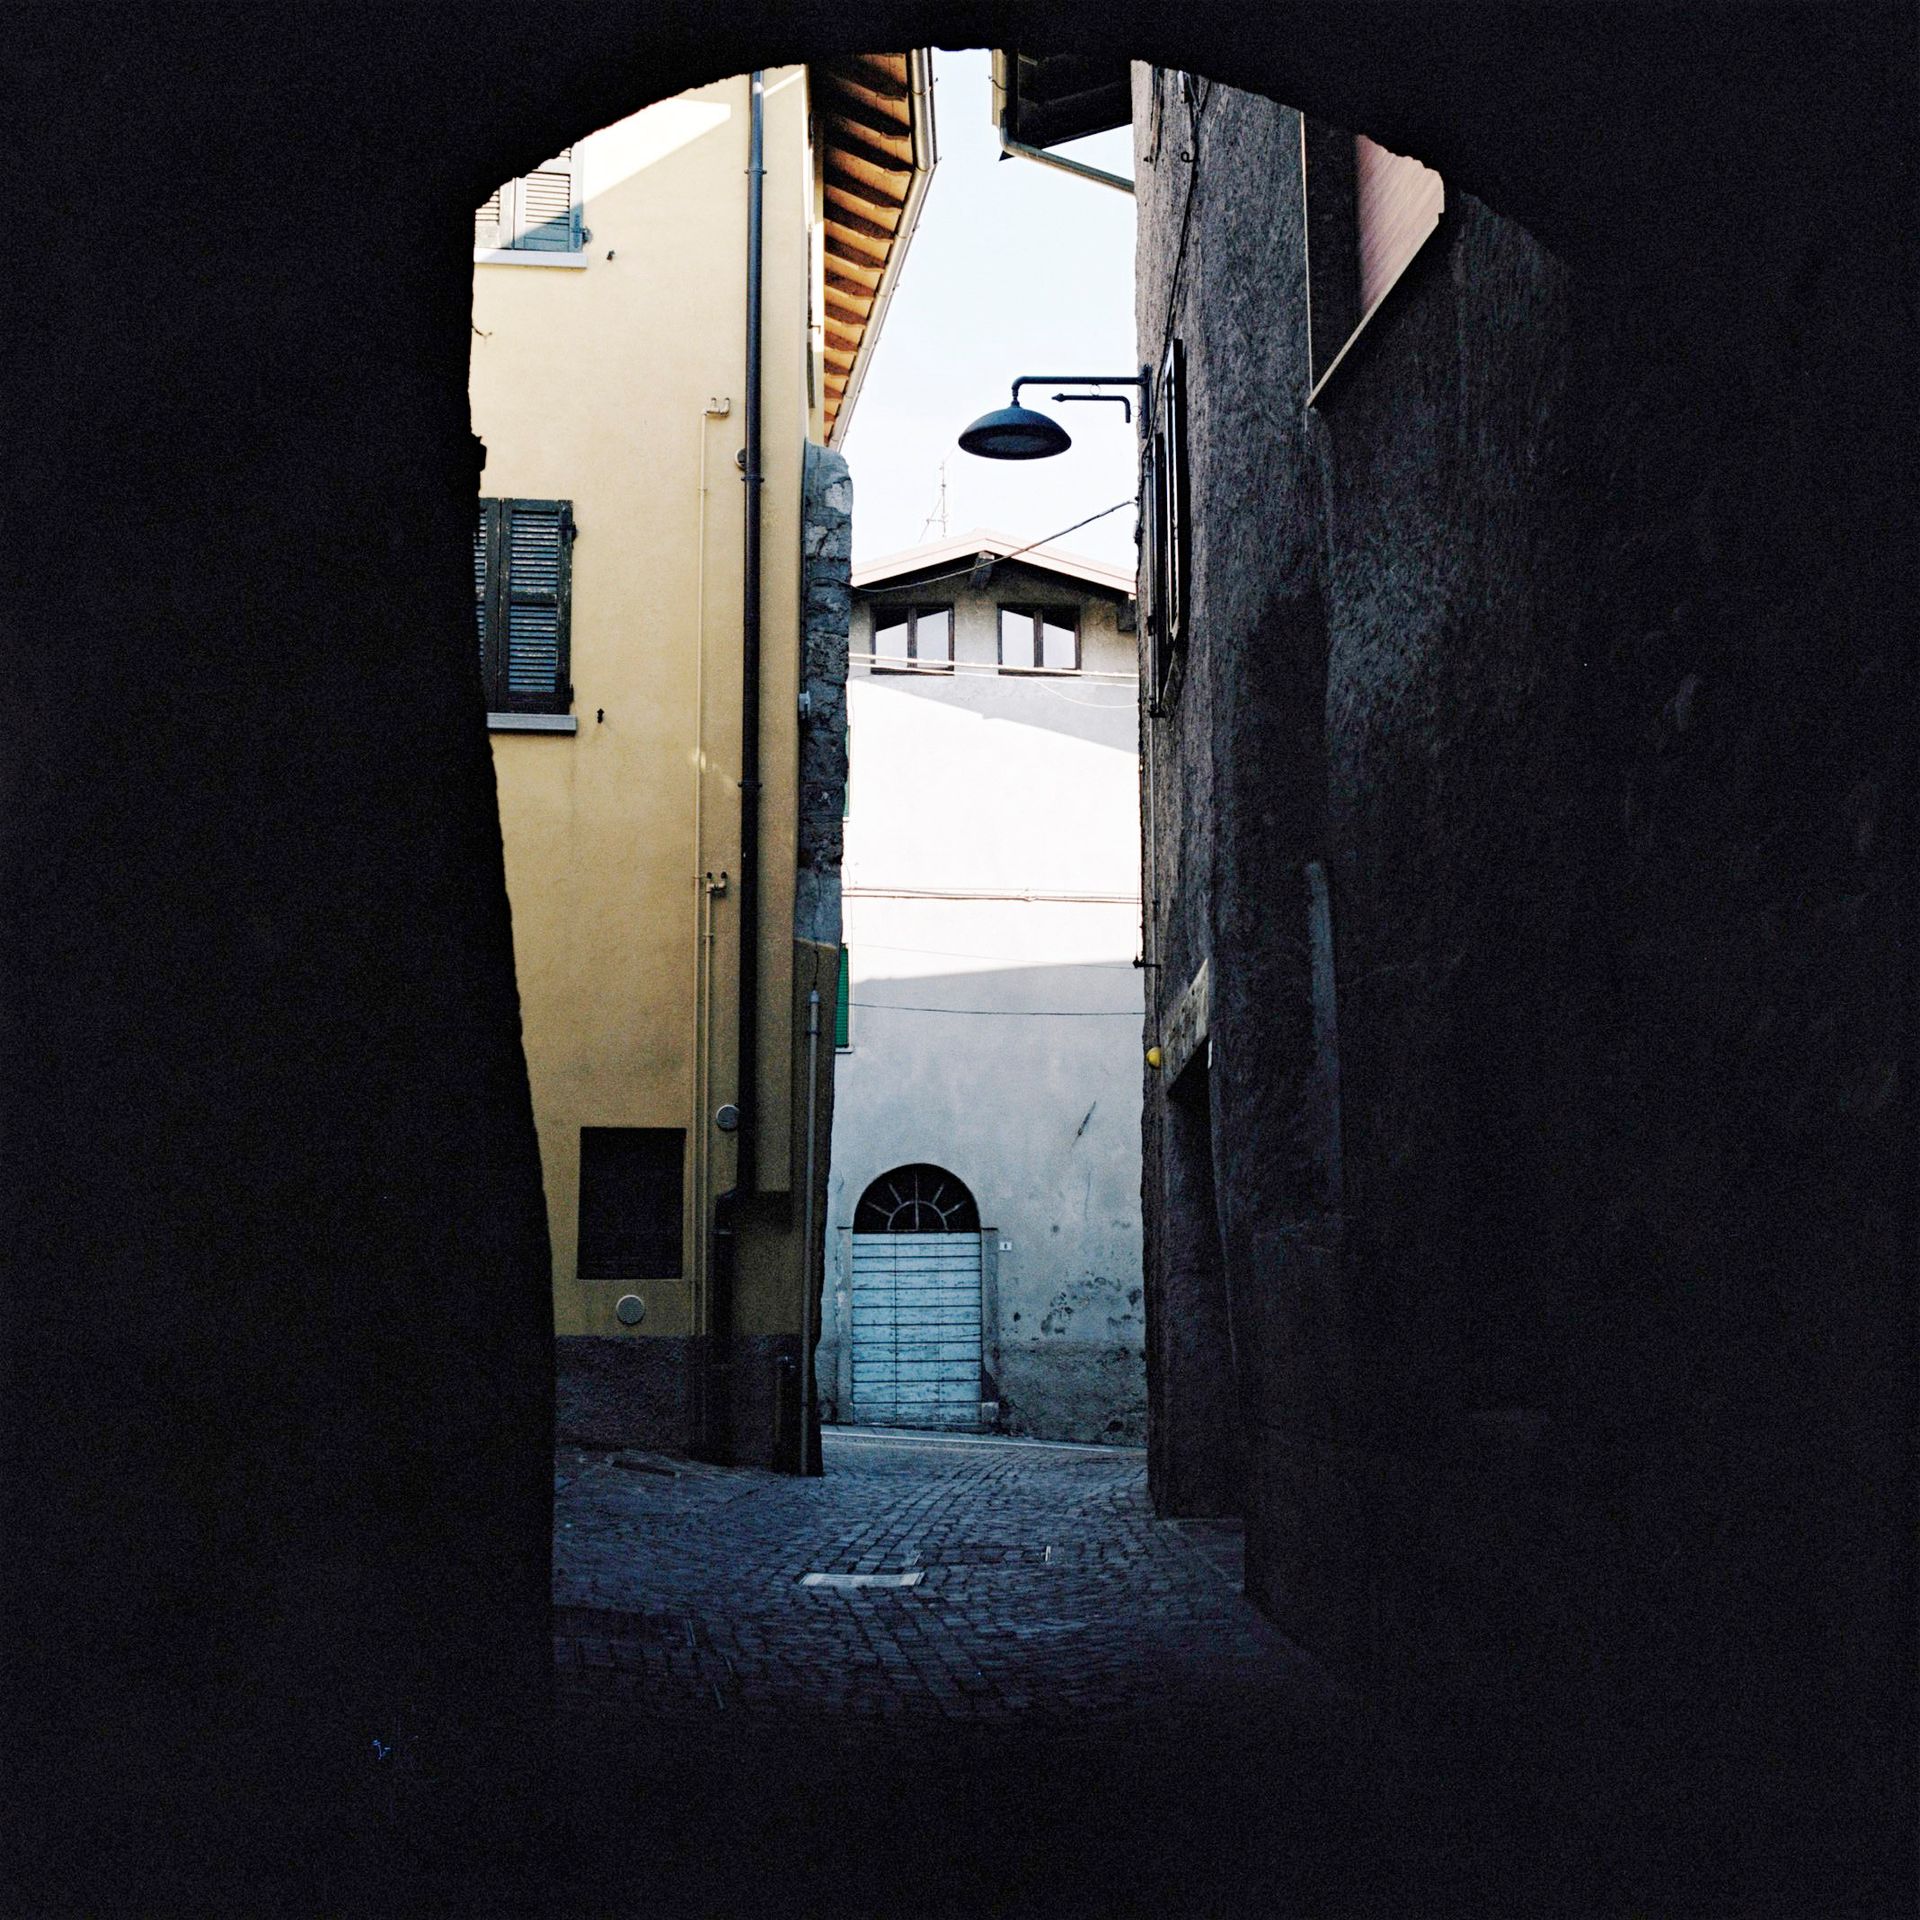 alley in Italy. street photo by Mariano Herrera